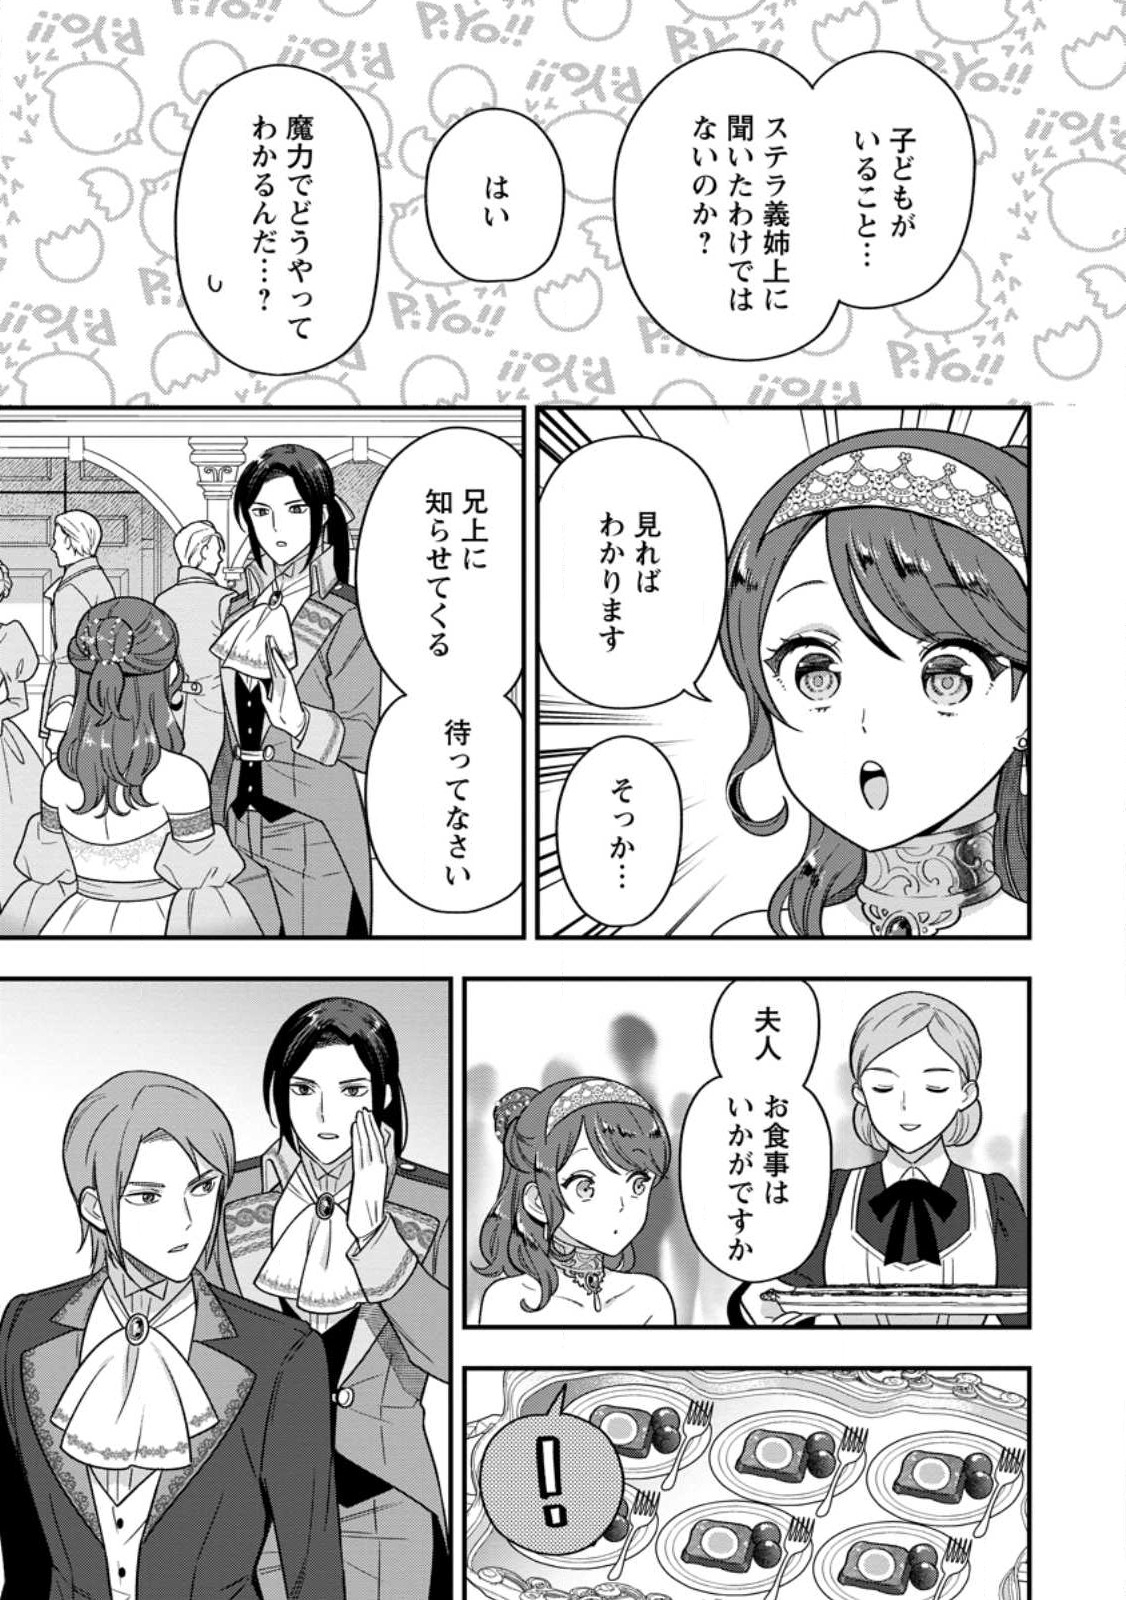 Aisanai to Iwaremashite mo - Chapter 12.3 - Page 5